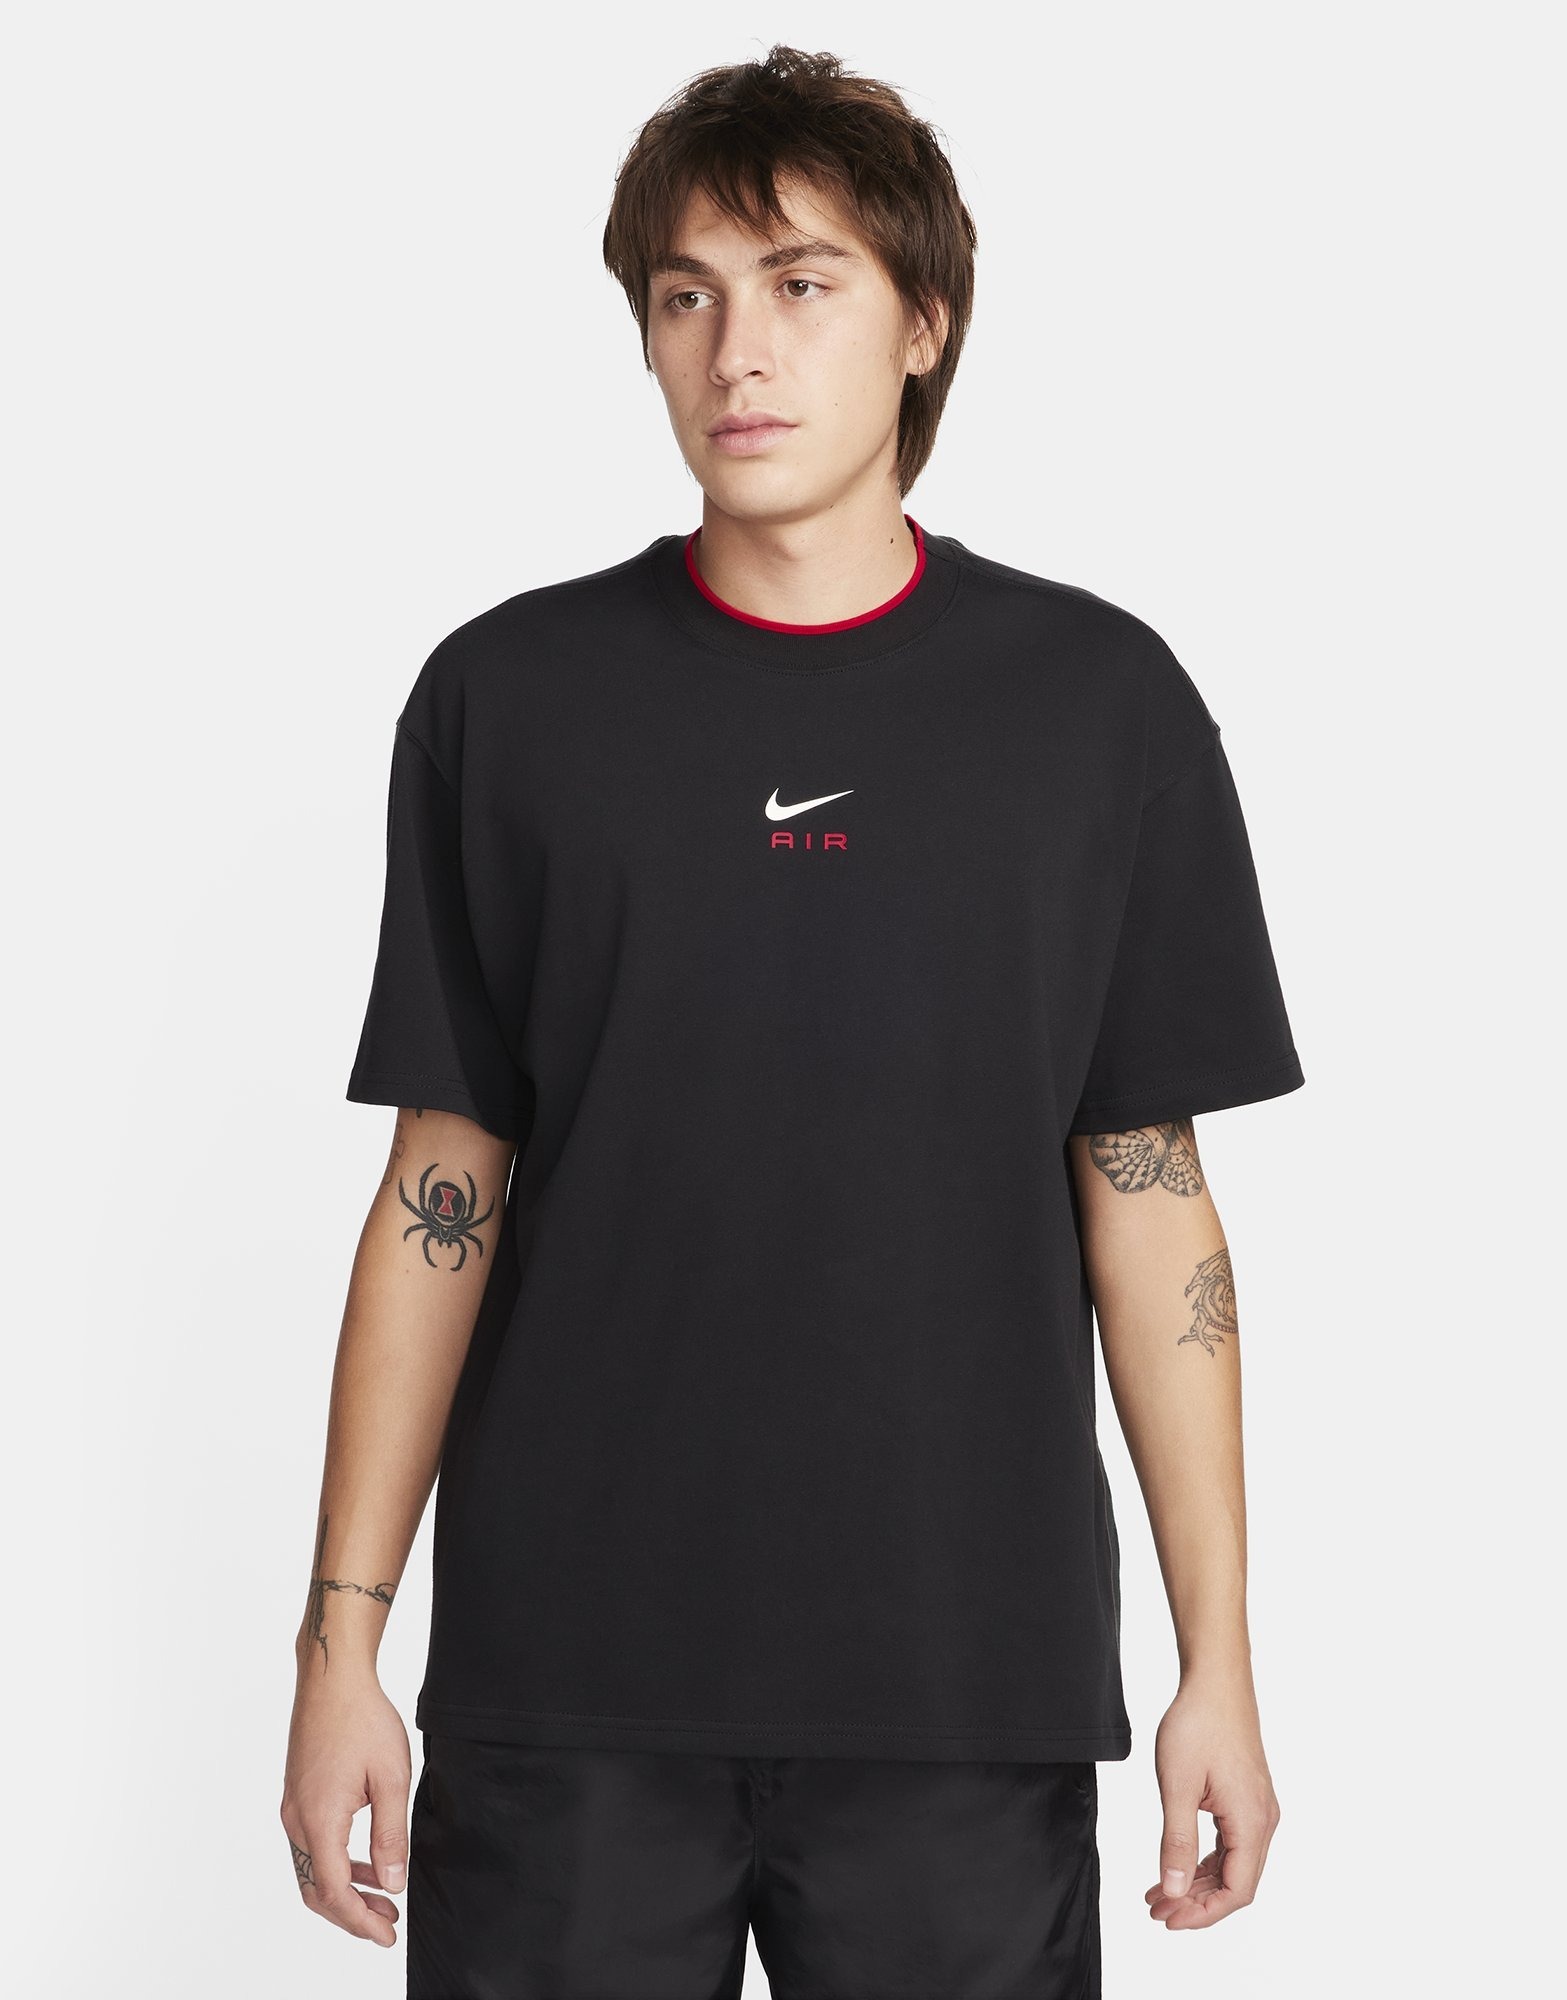 Black Nike Nike Air Men's T-Shirt | JD Sports UK